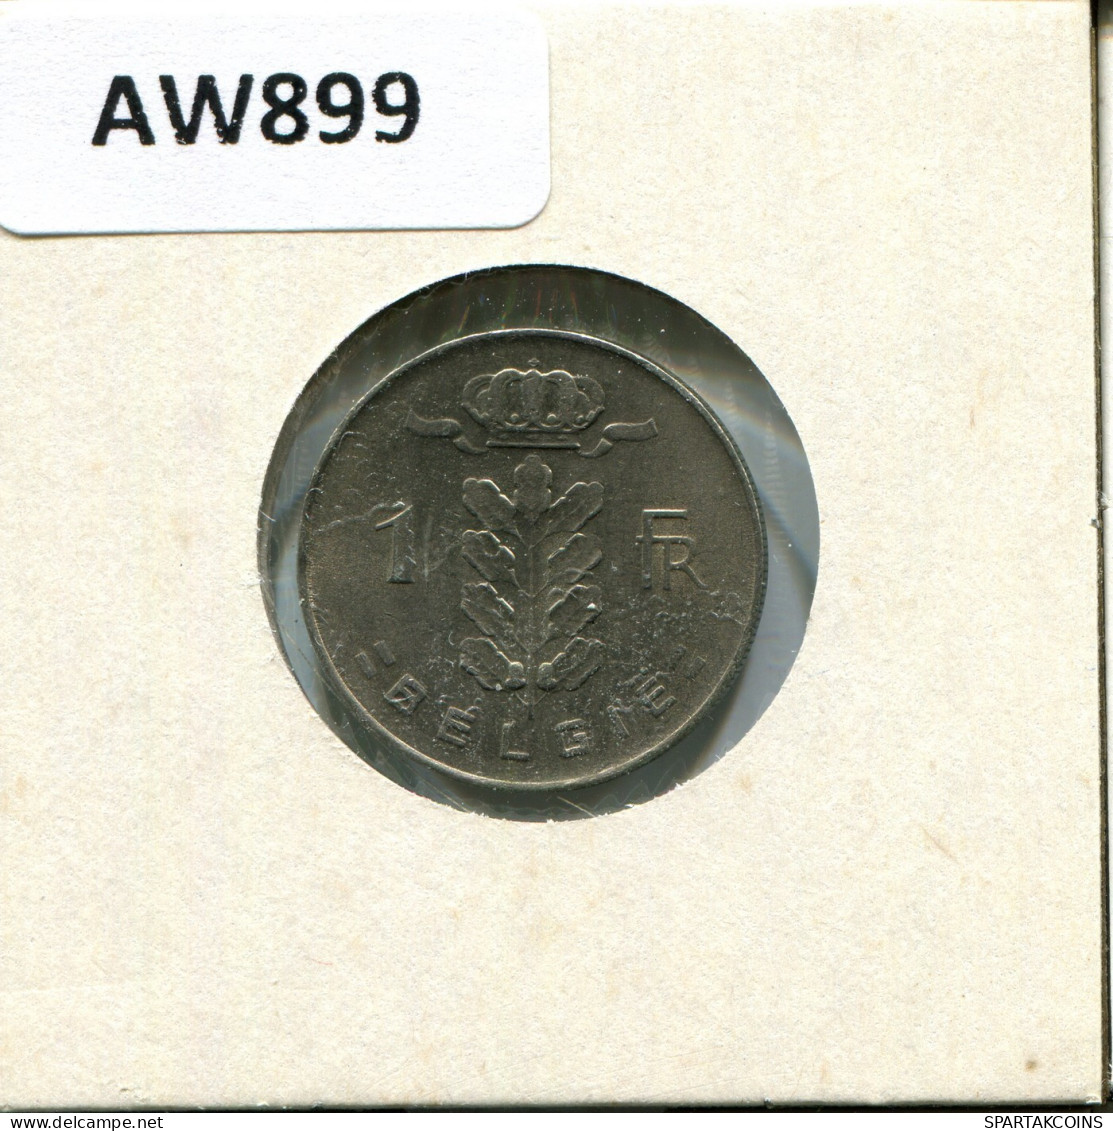 1 FRANC 1975 DUTCH Text BELGIEN BELGIUM Münze #AW899.D.A - 1 Franc